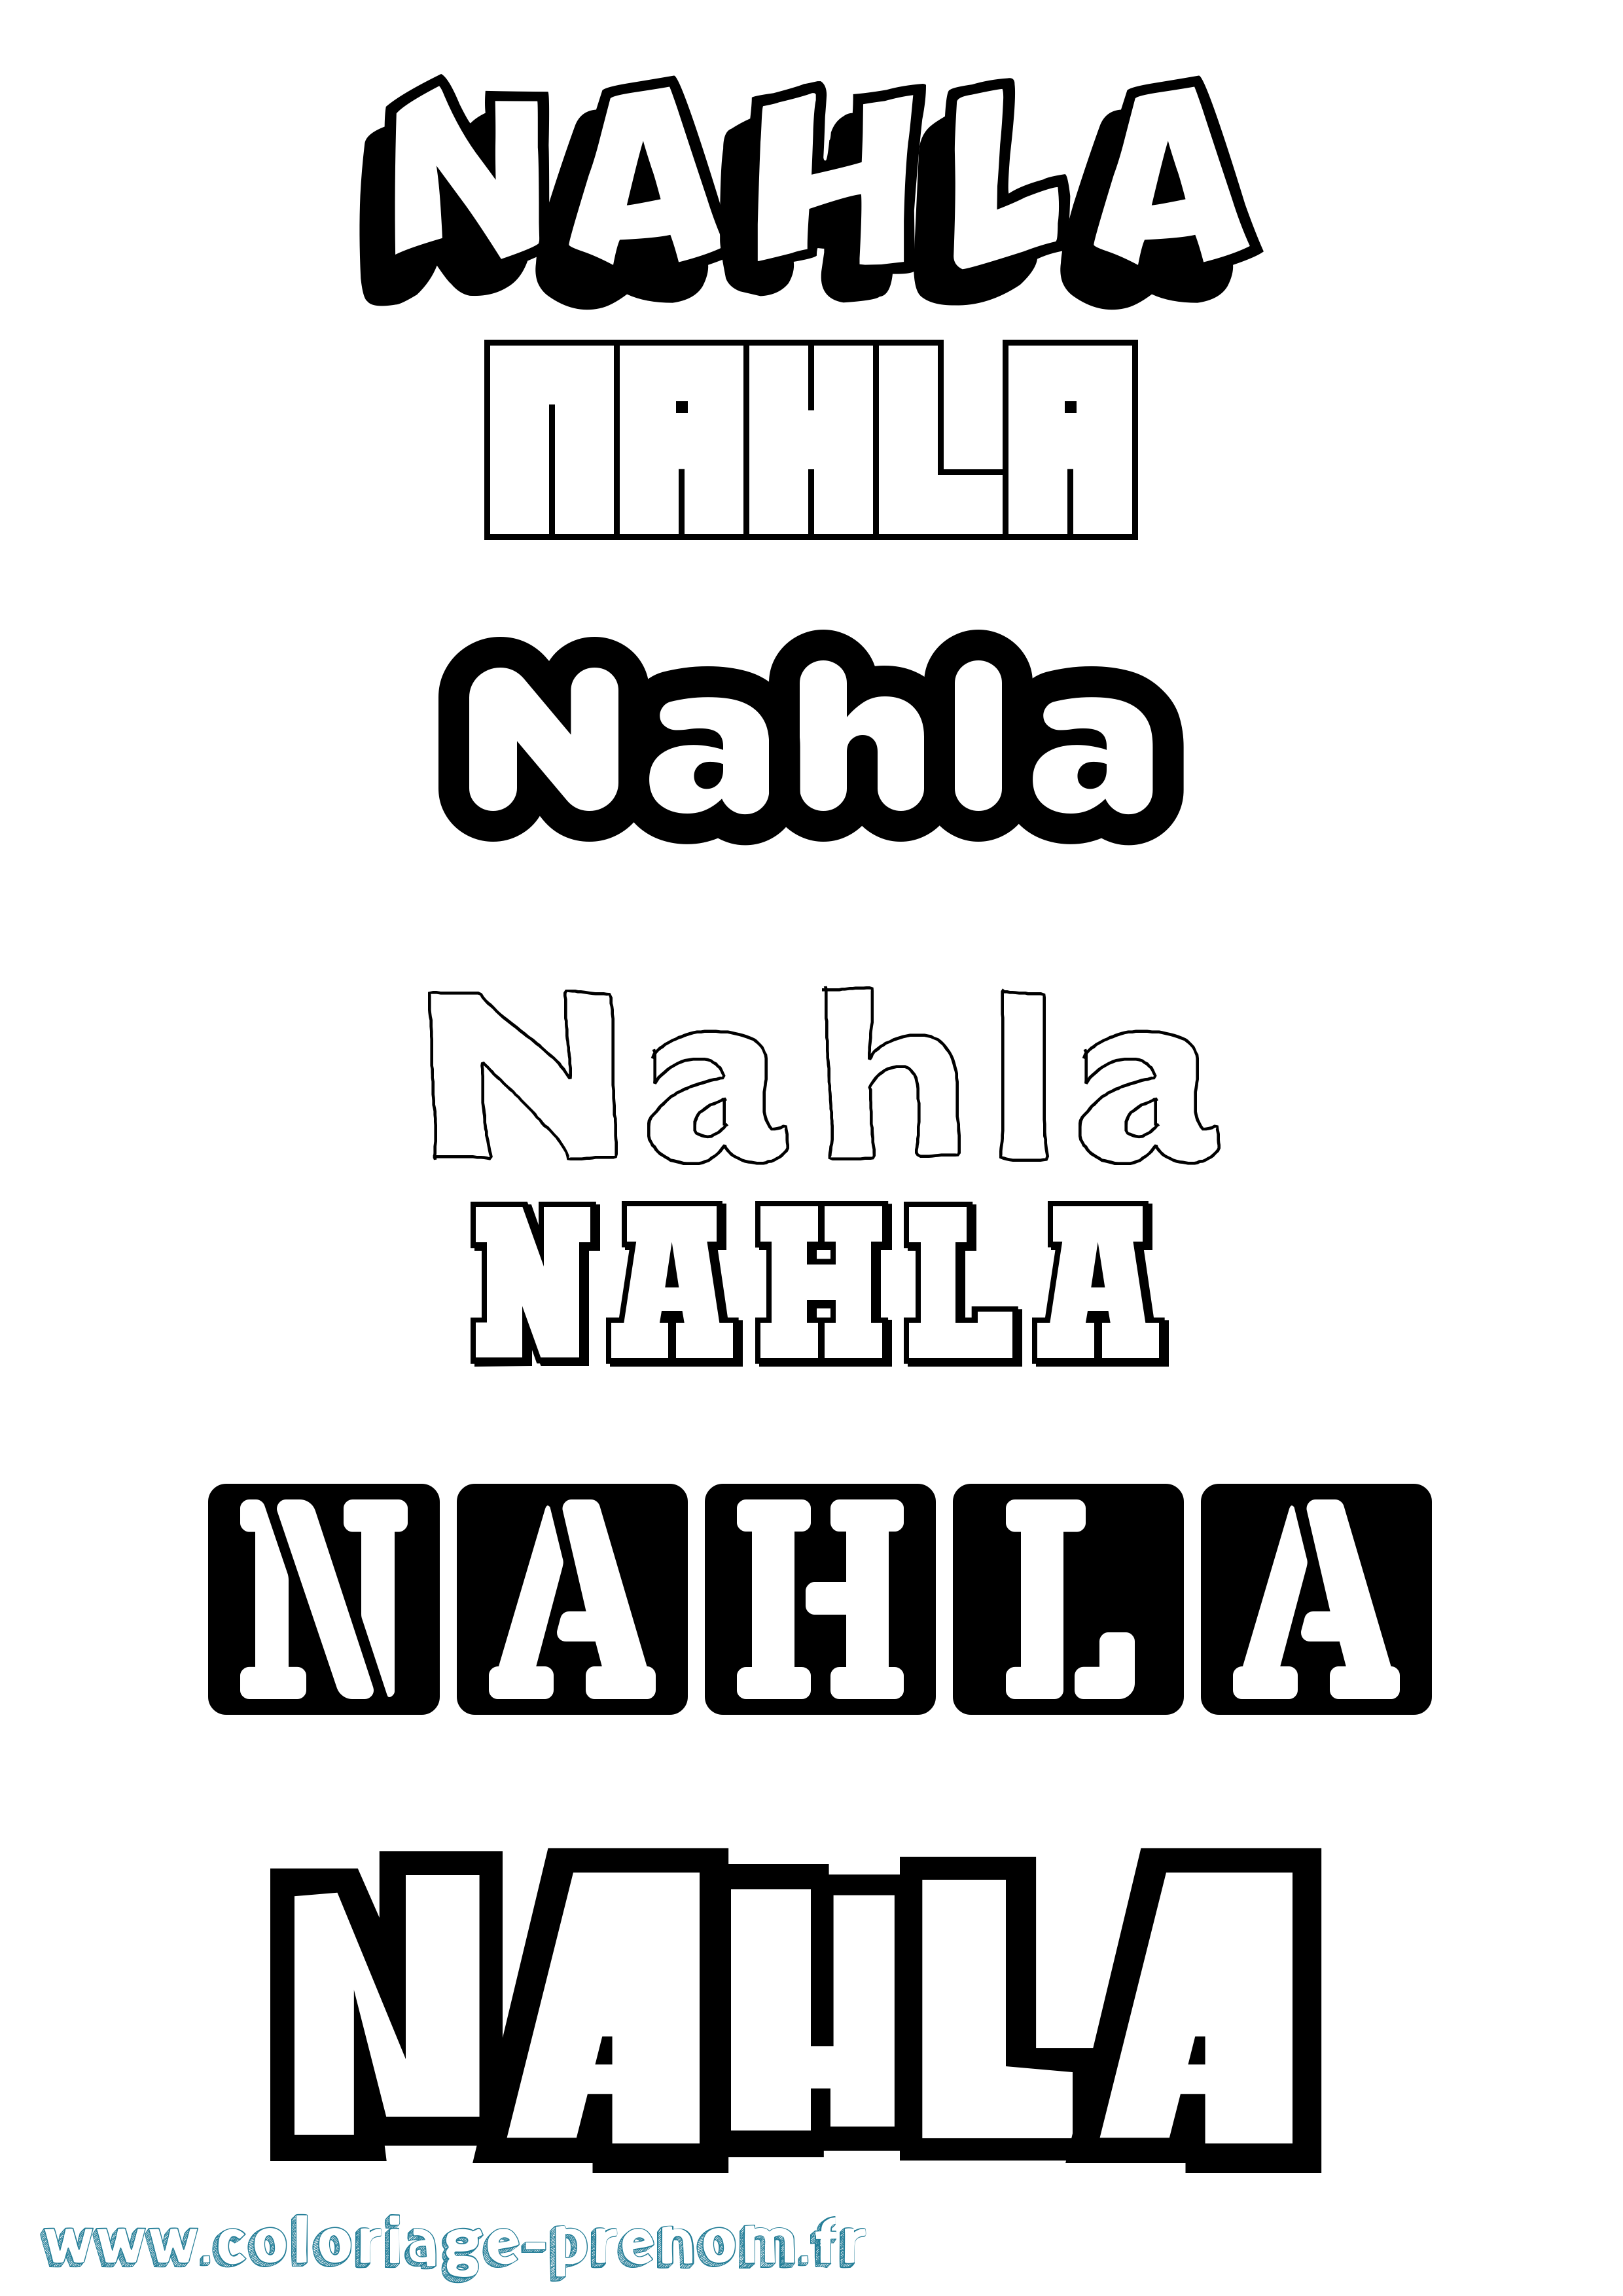 Coloriage prénom Nahla